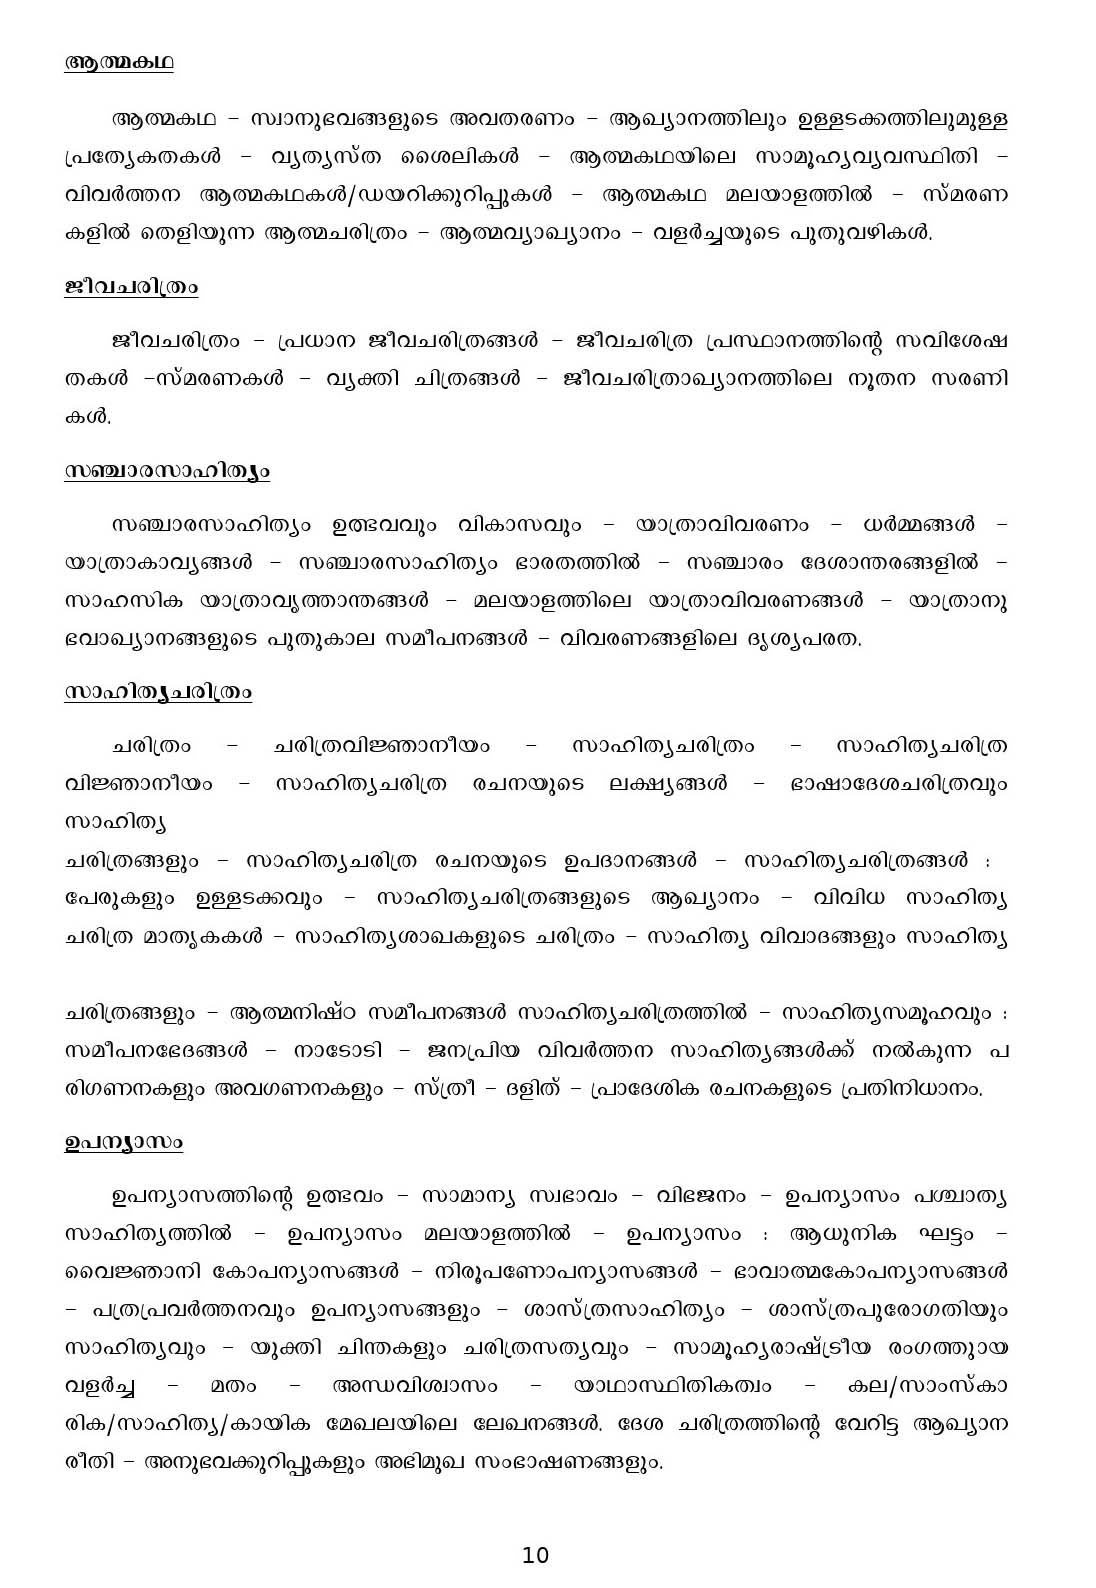 Kerala PSC Assistant Professor Malayalam Exam Syllabus - Notification Image 10